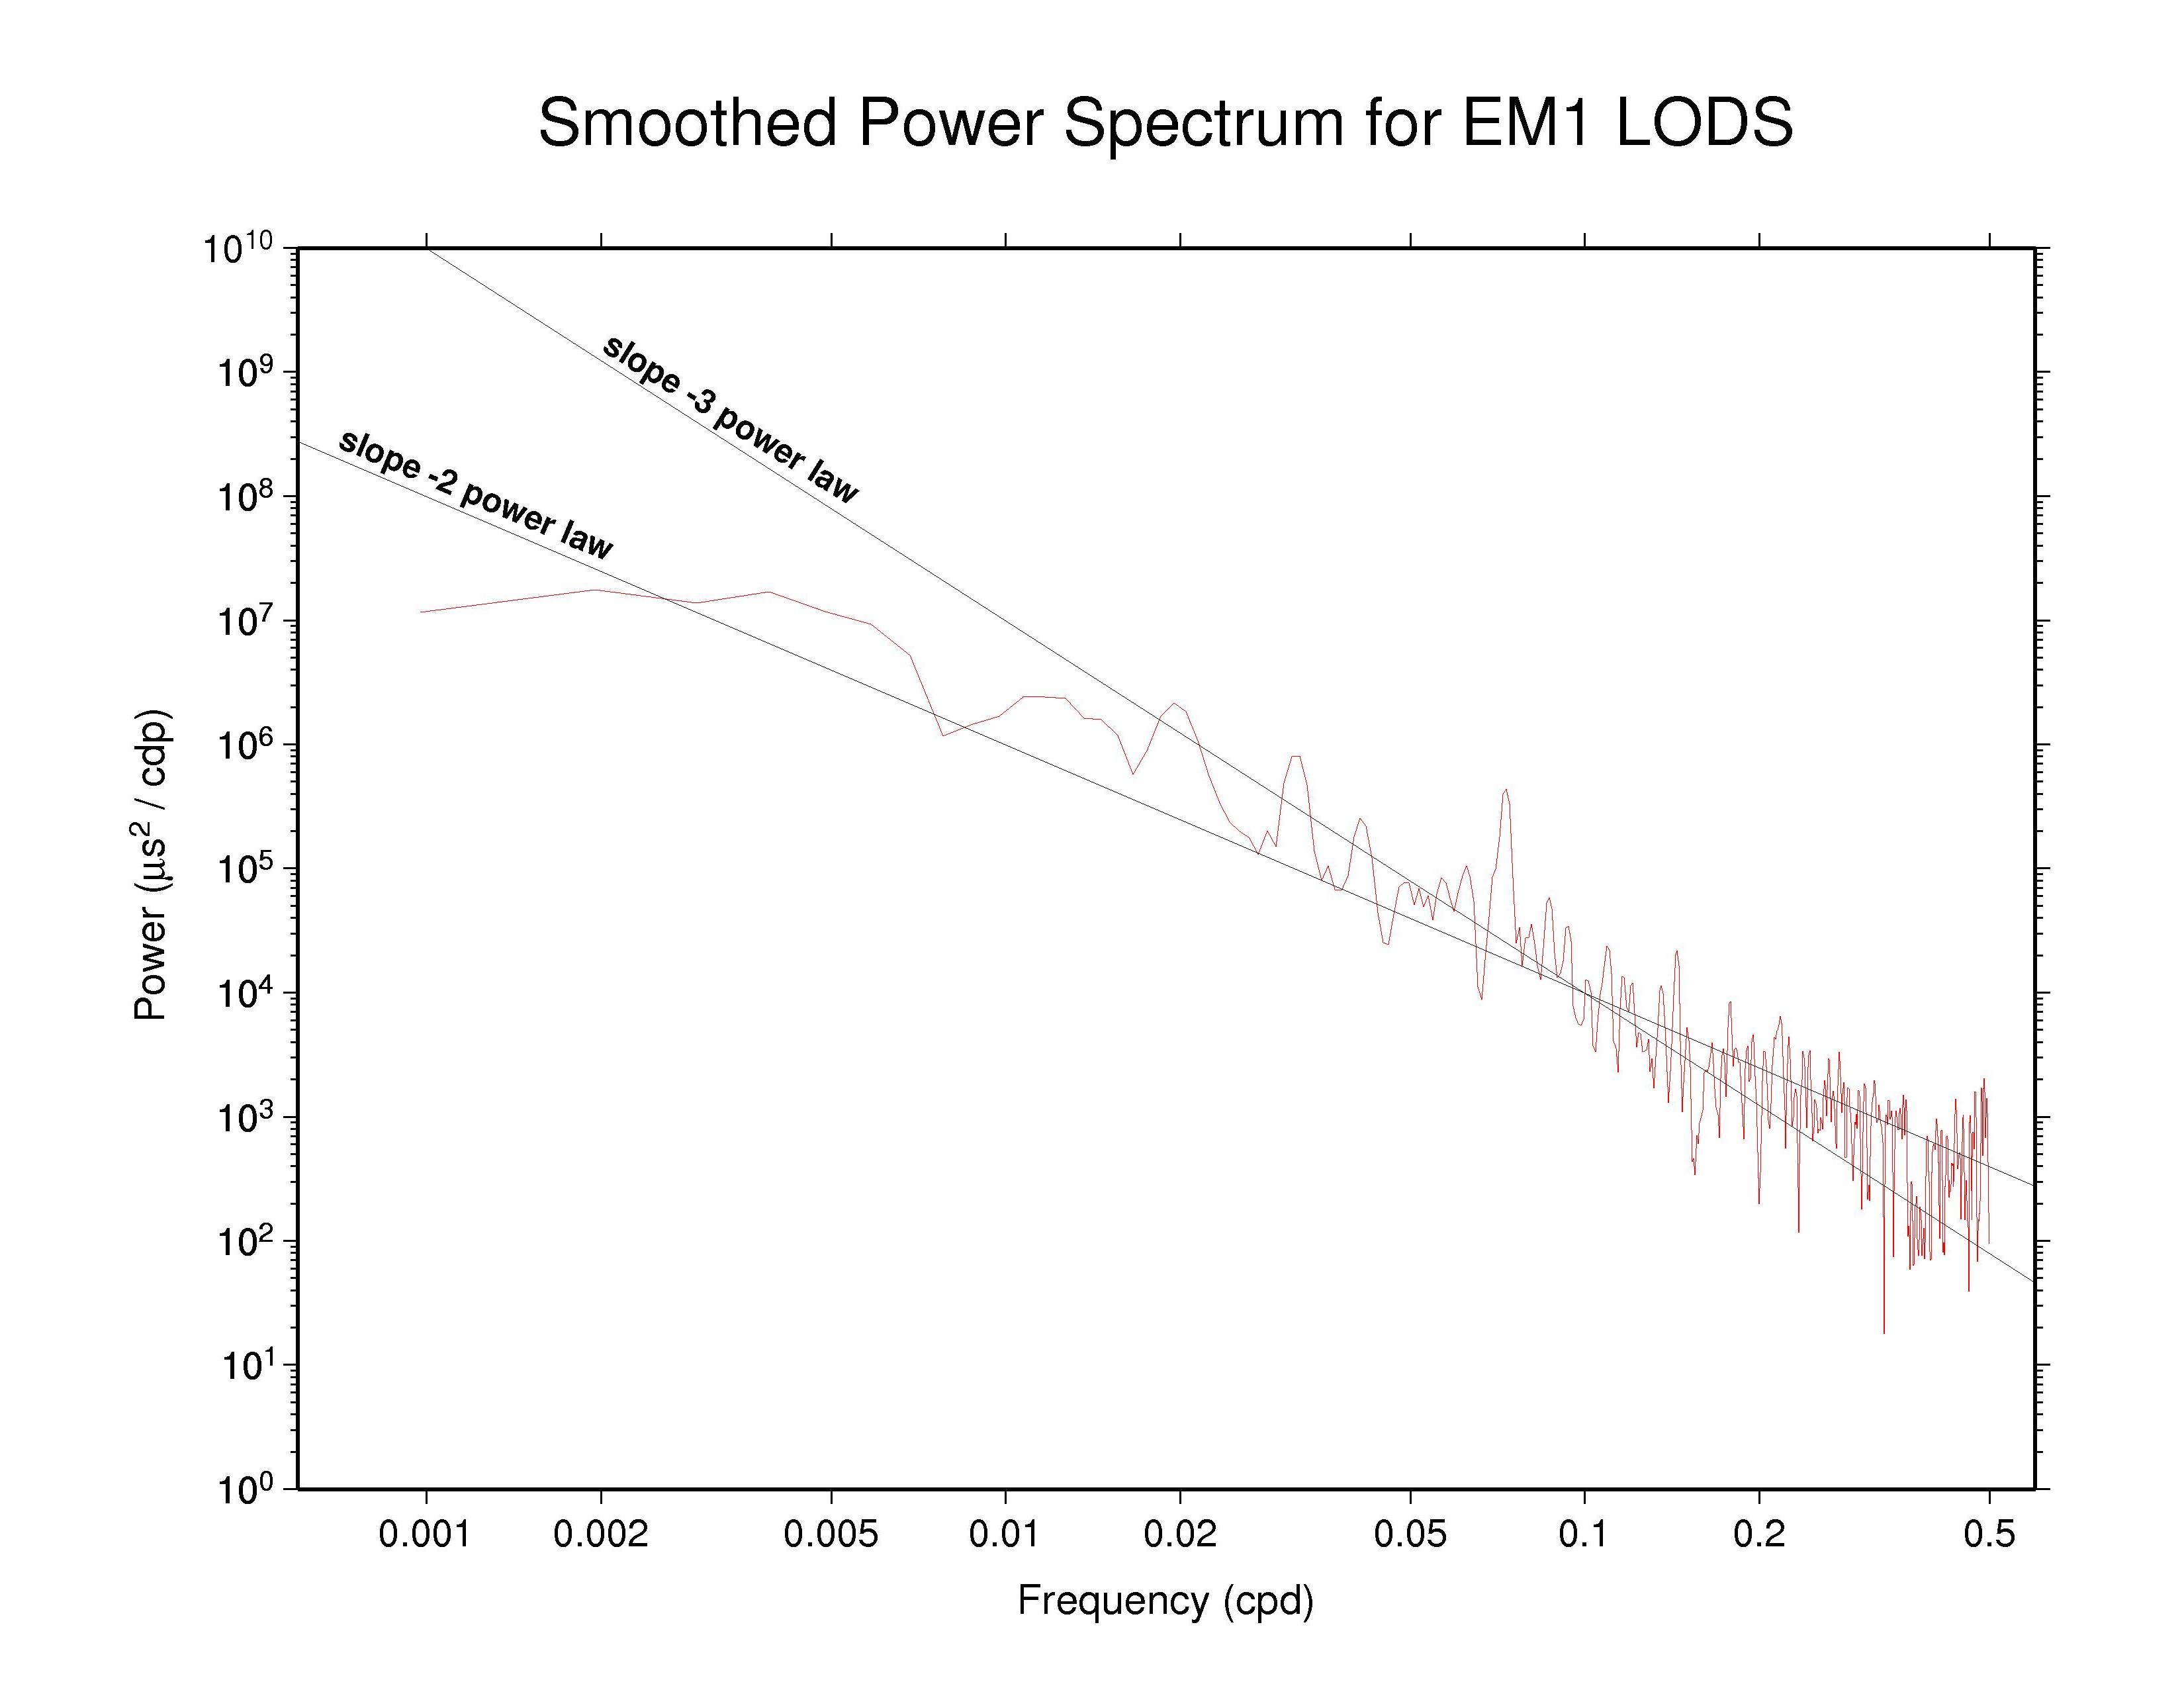 EMR polar motion spectra